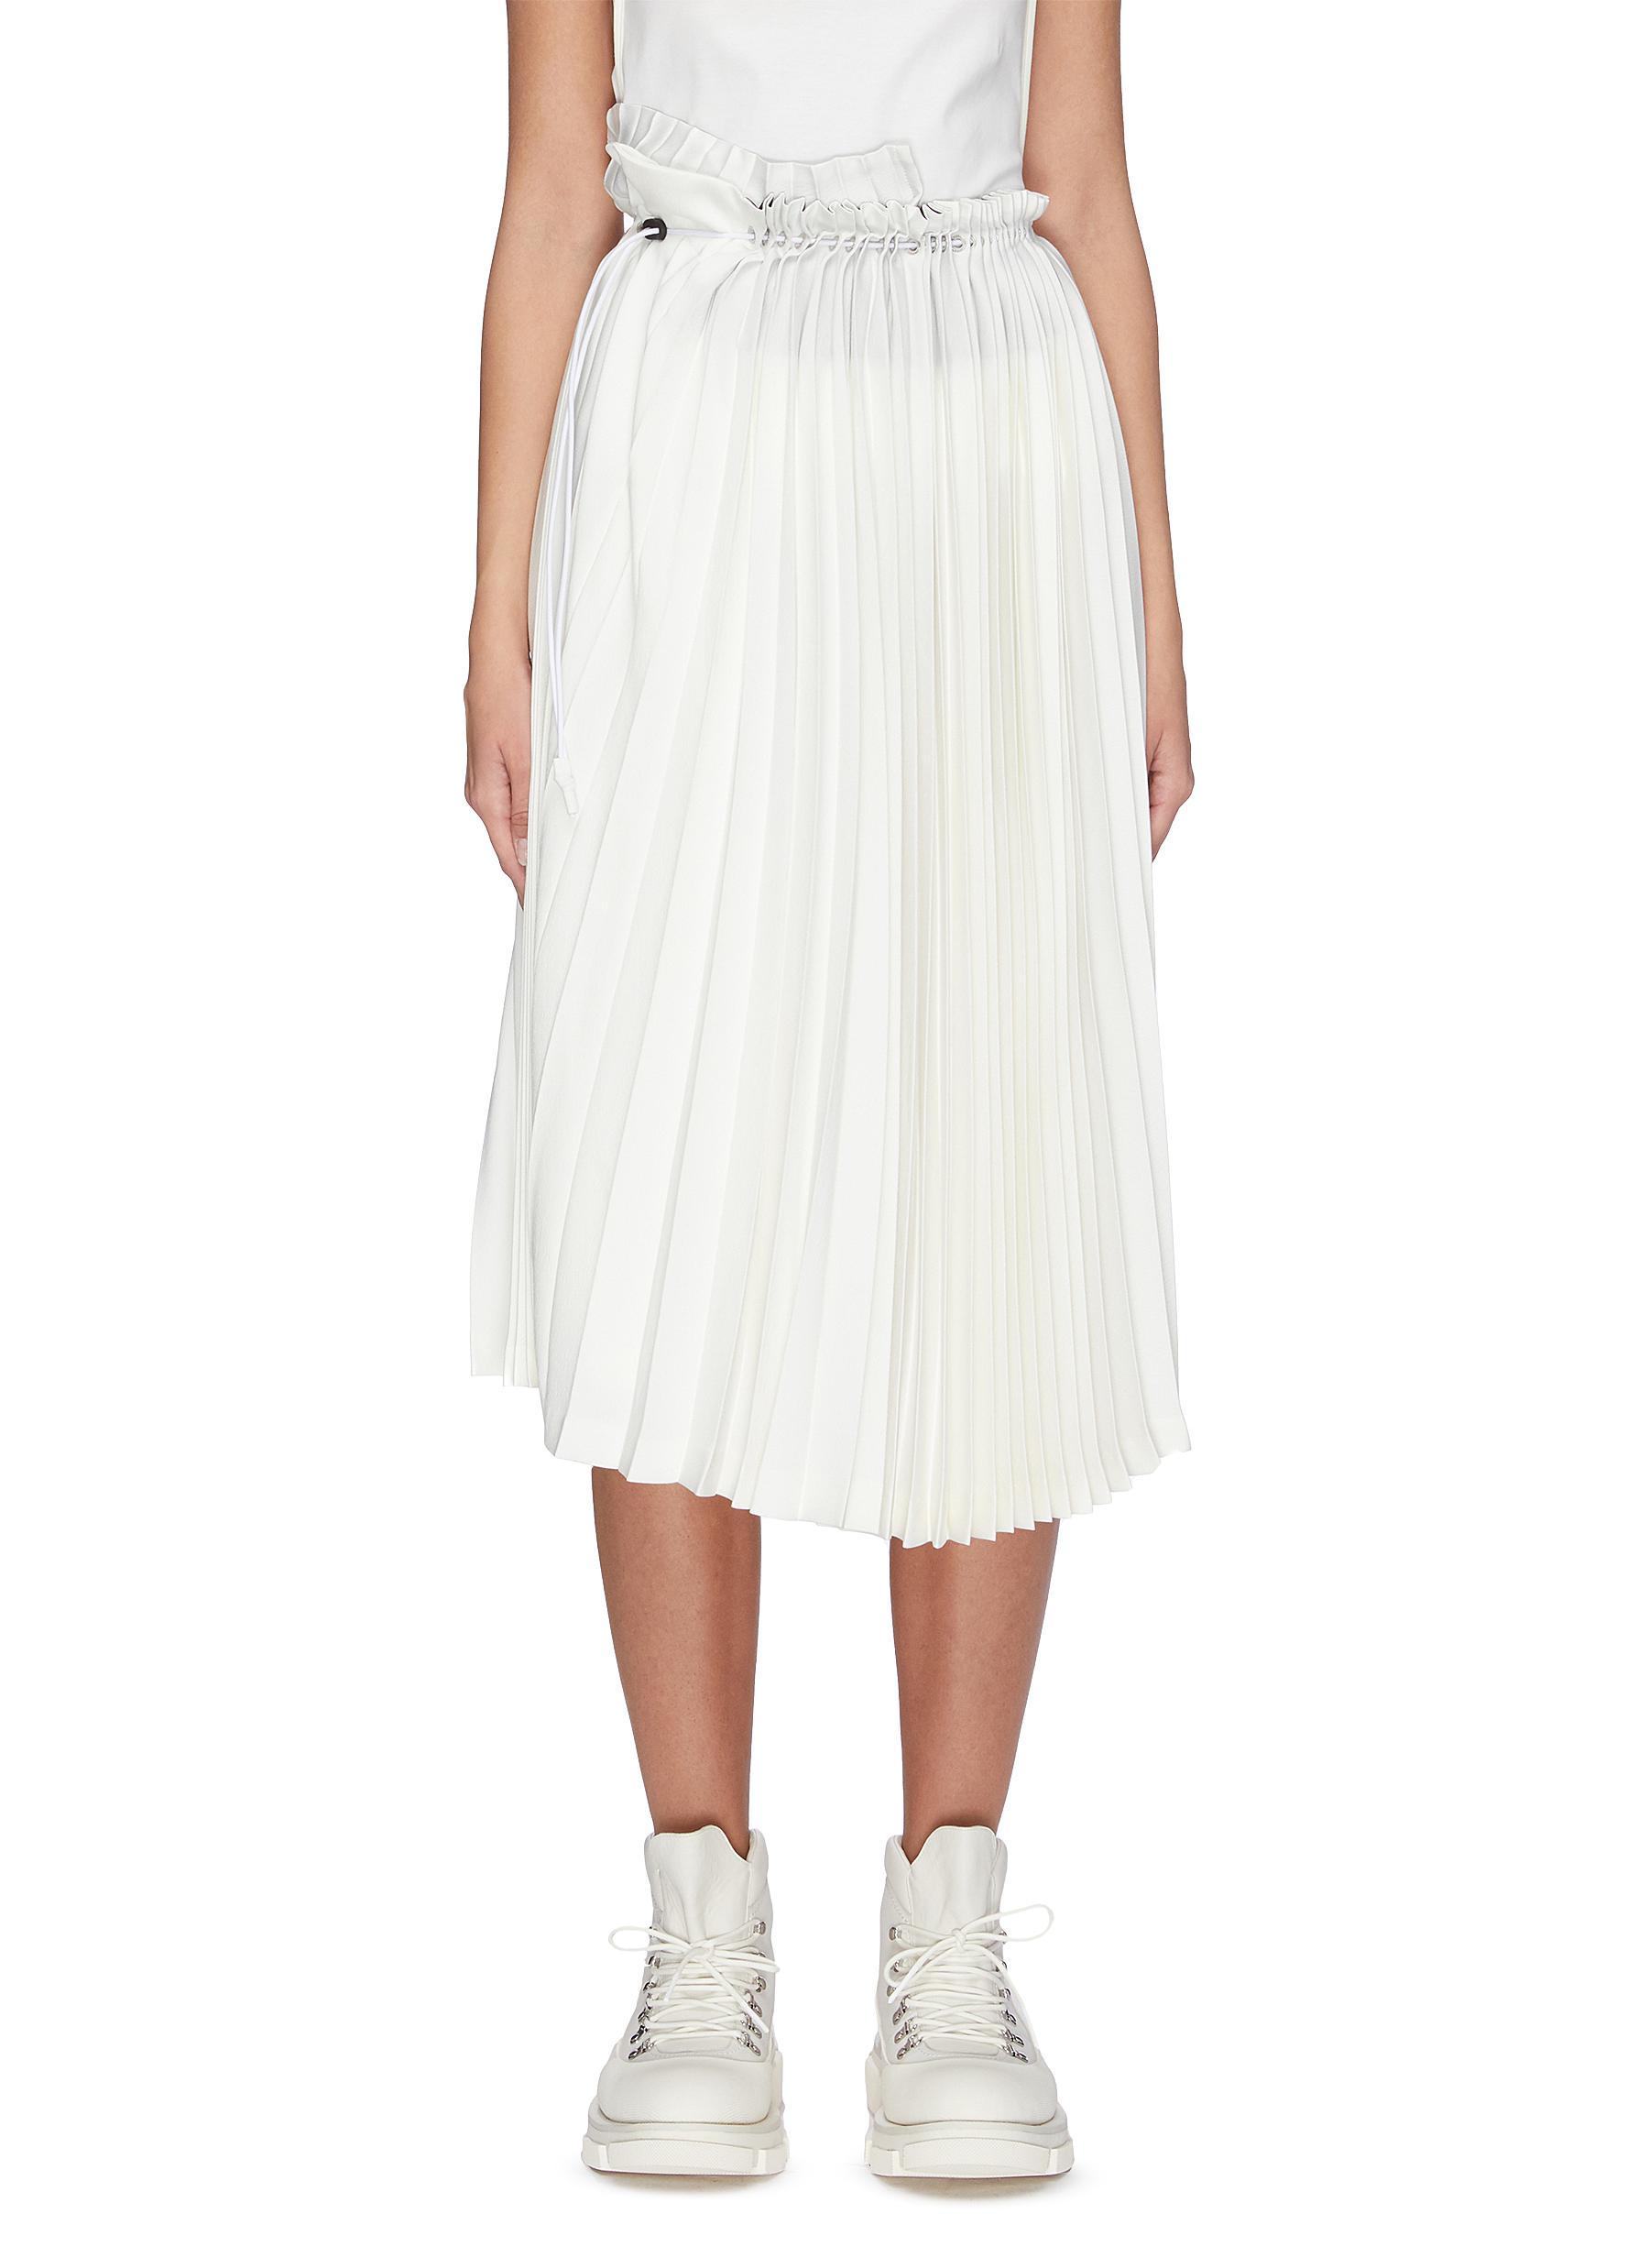 Toga Drawstring Waist Pleated Satin Skirt in White - Lyst